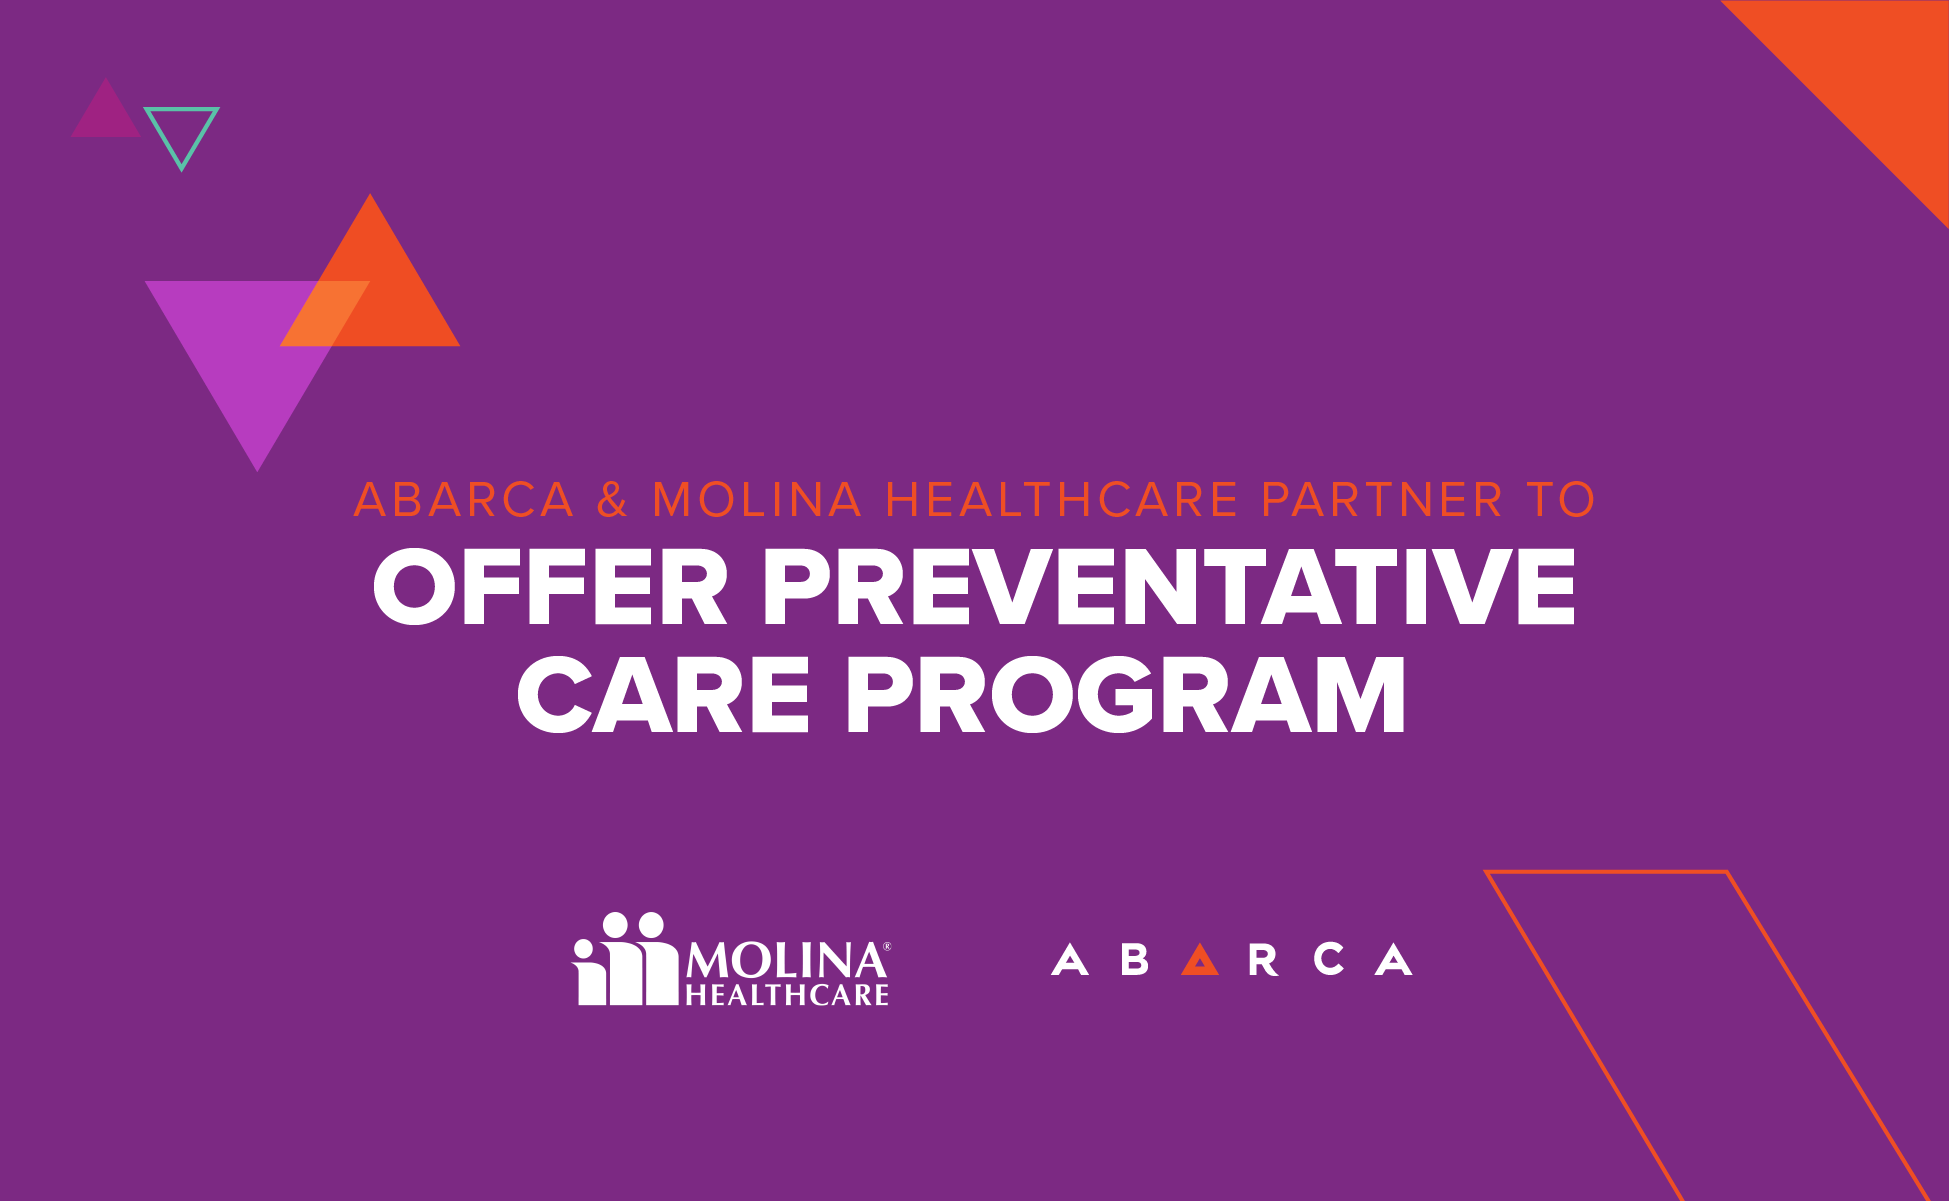 Abarca and Molina Healthcare partner to offer preventative care program for members